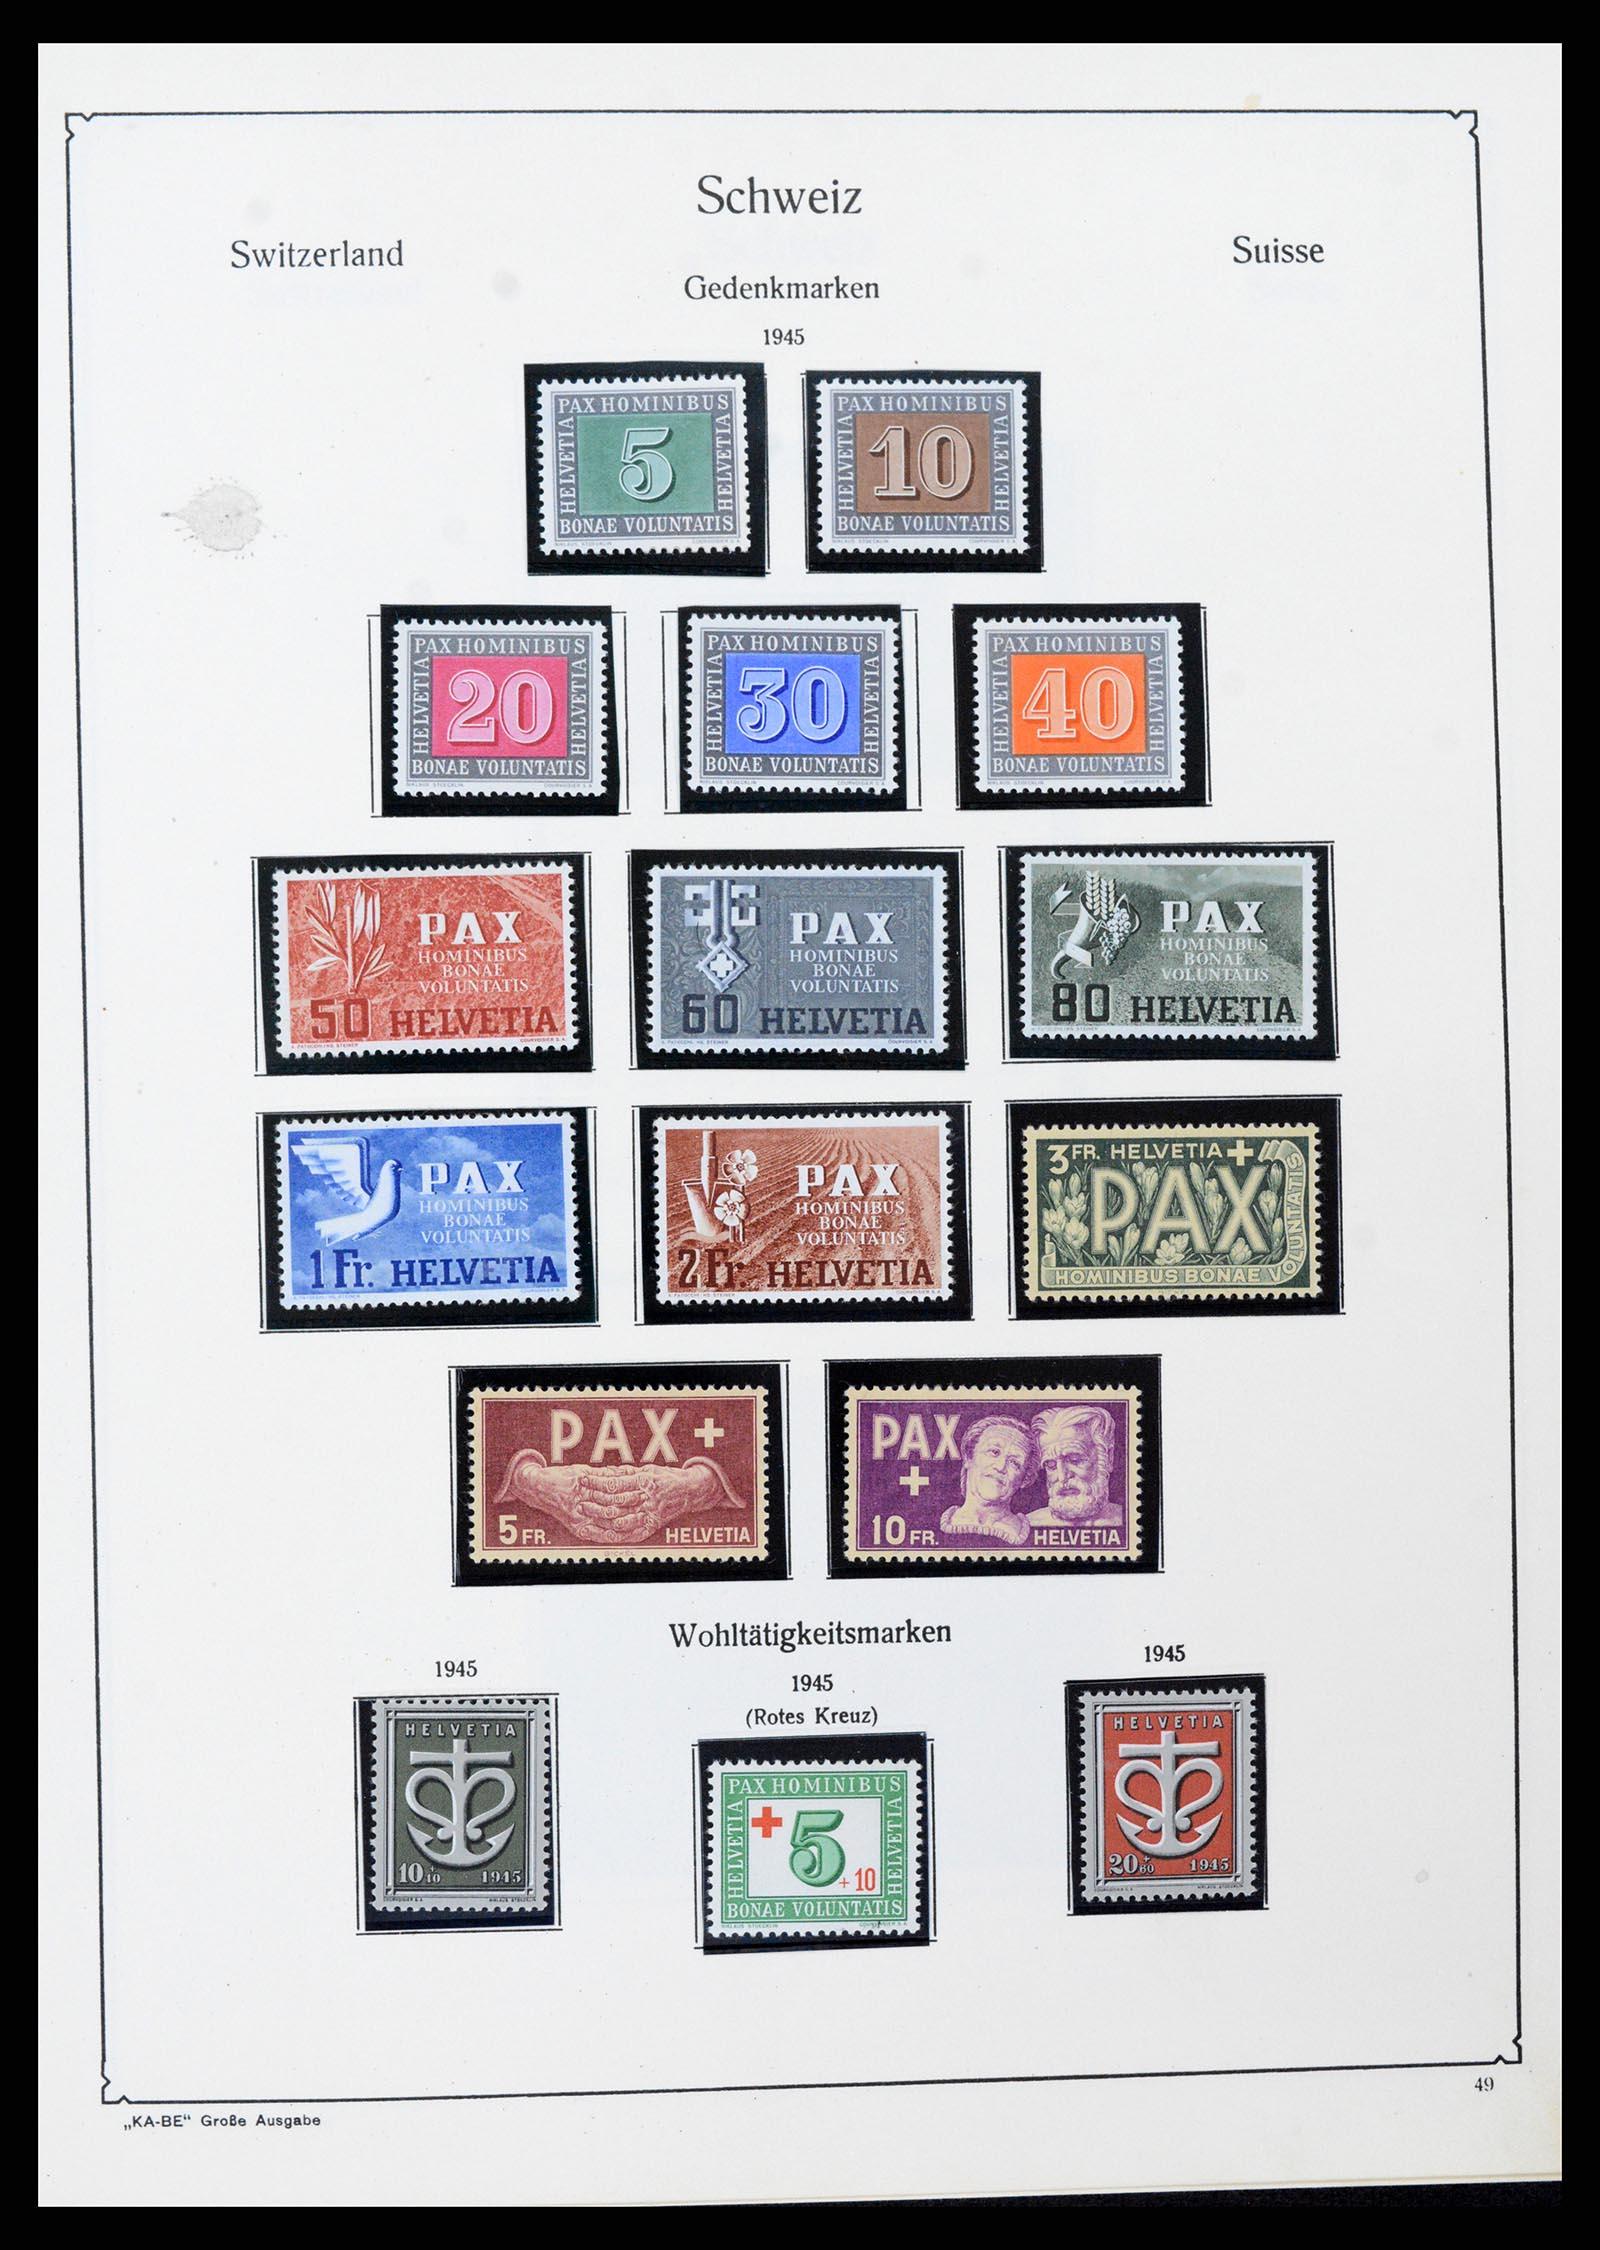 37588 047 - Stamp collection 37588 Switzerland 1854-1974.